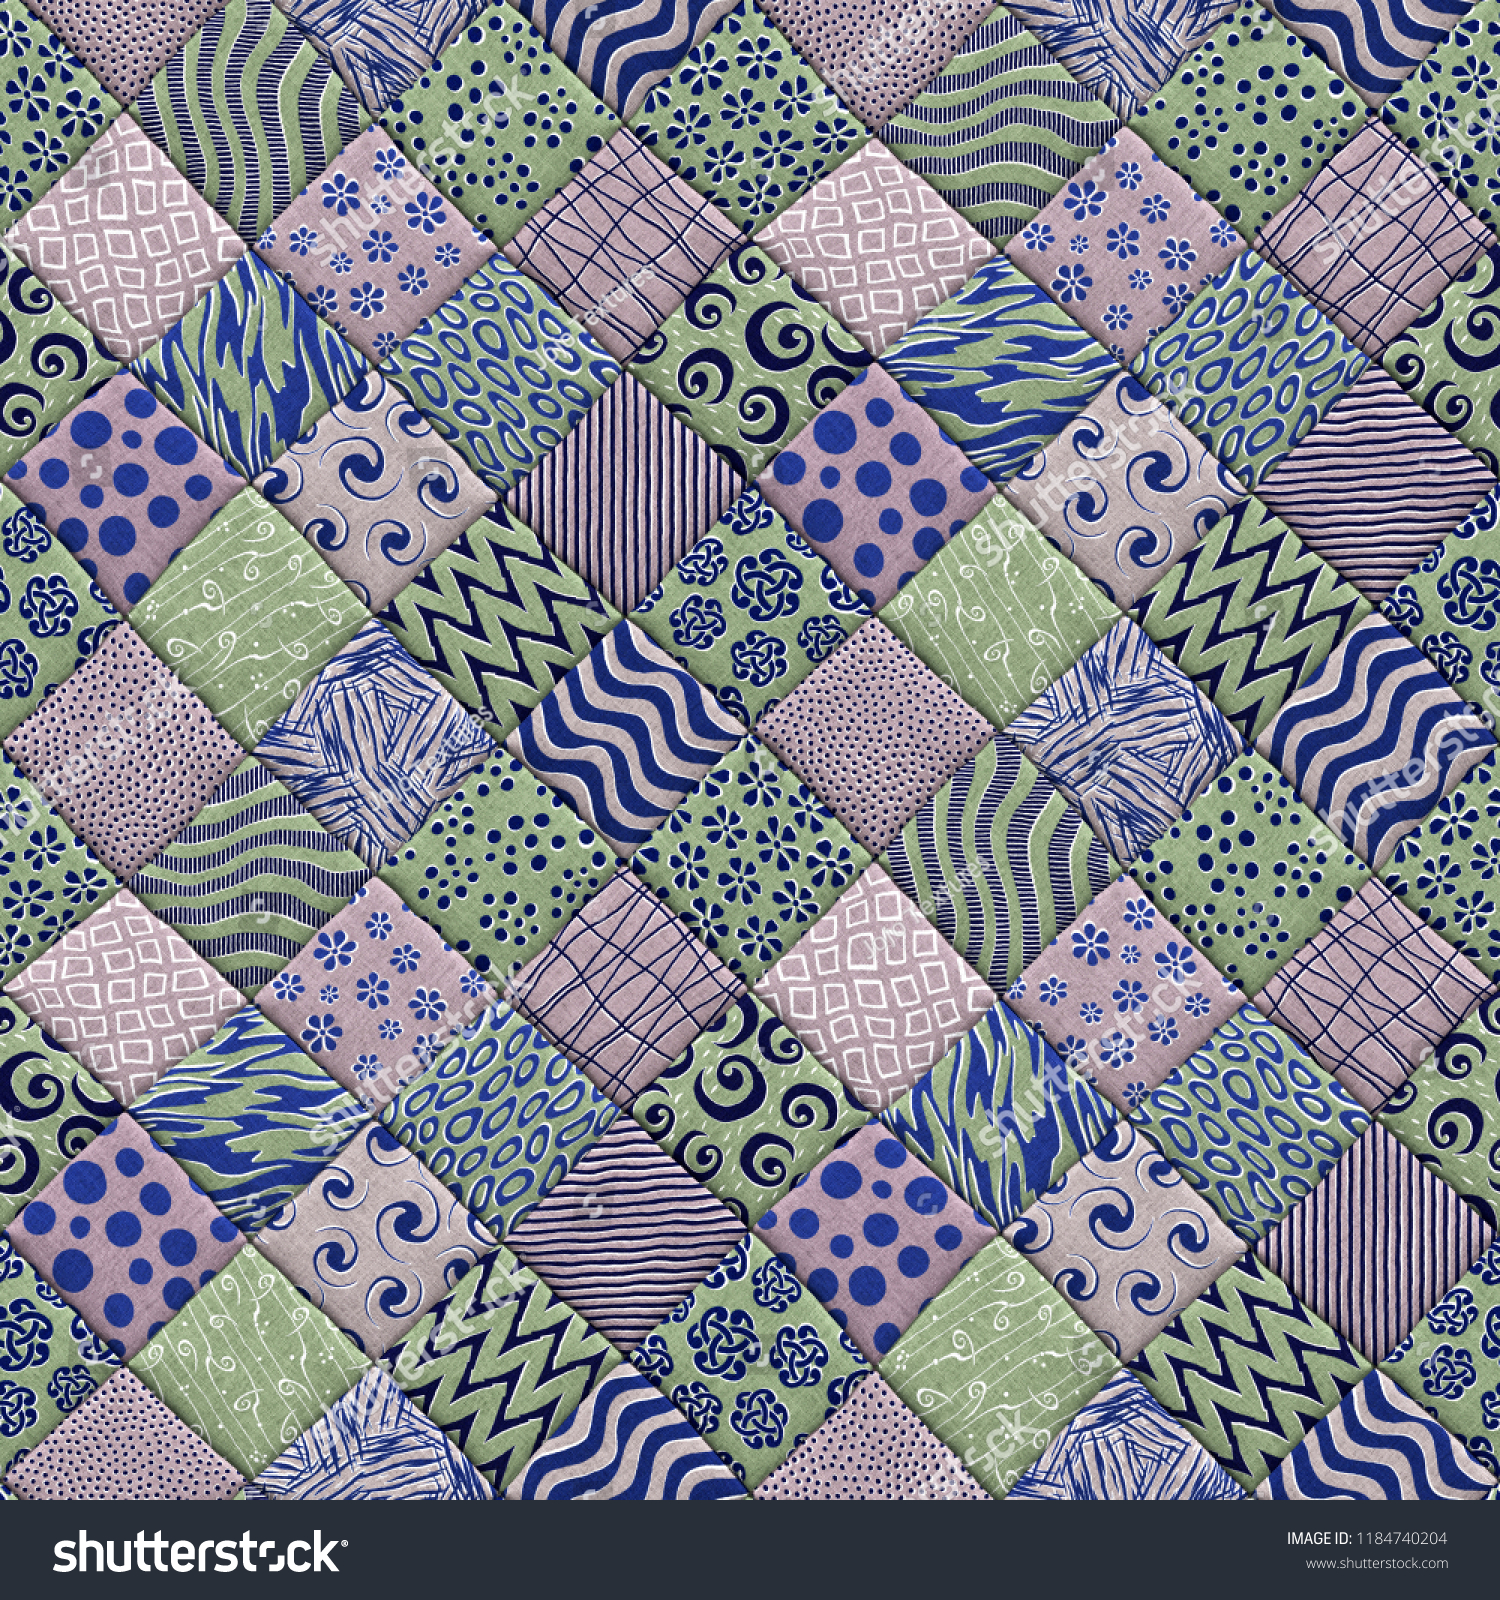 patchwork quilt fabric